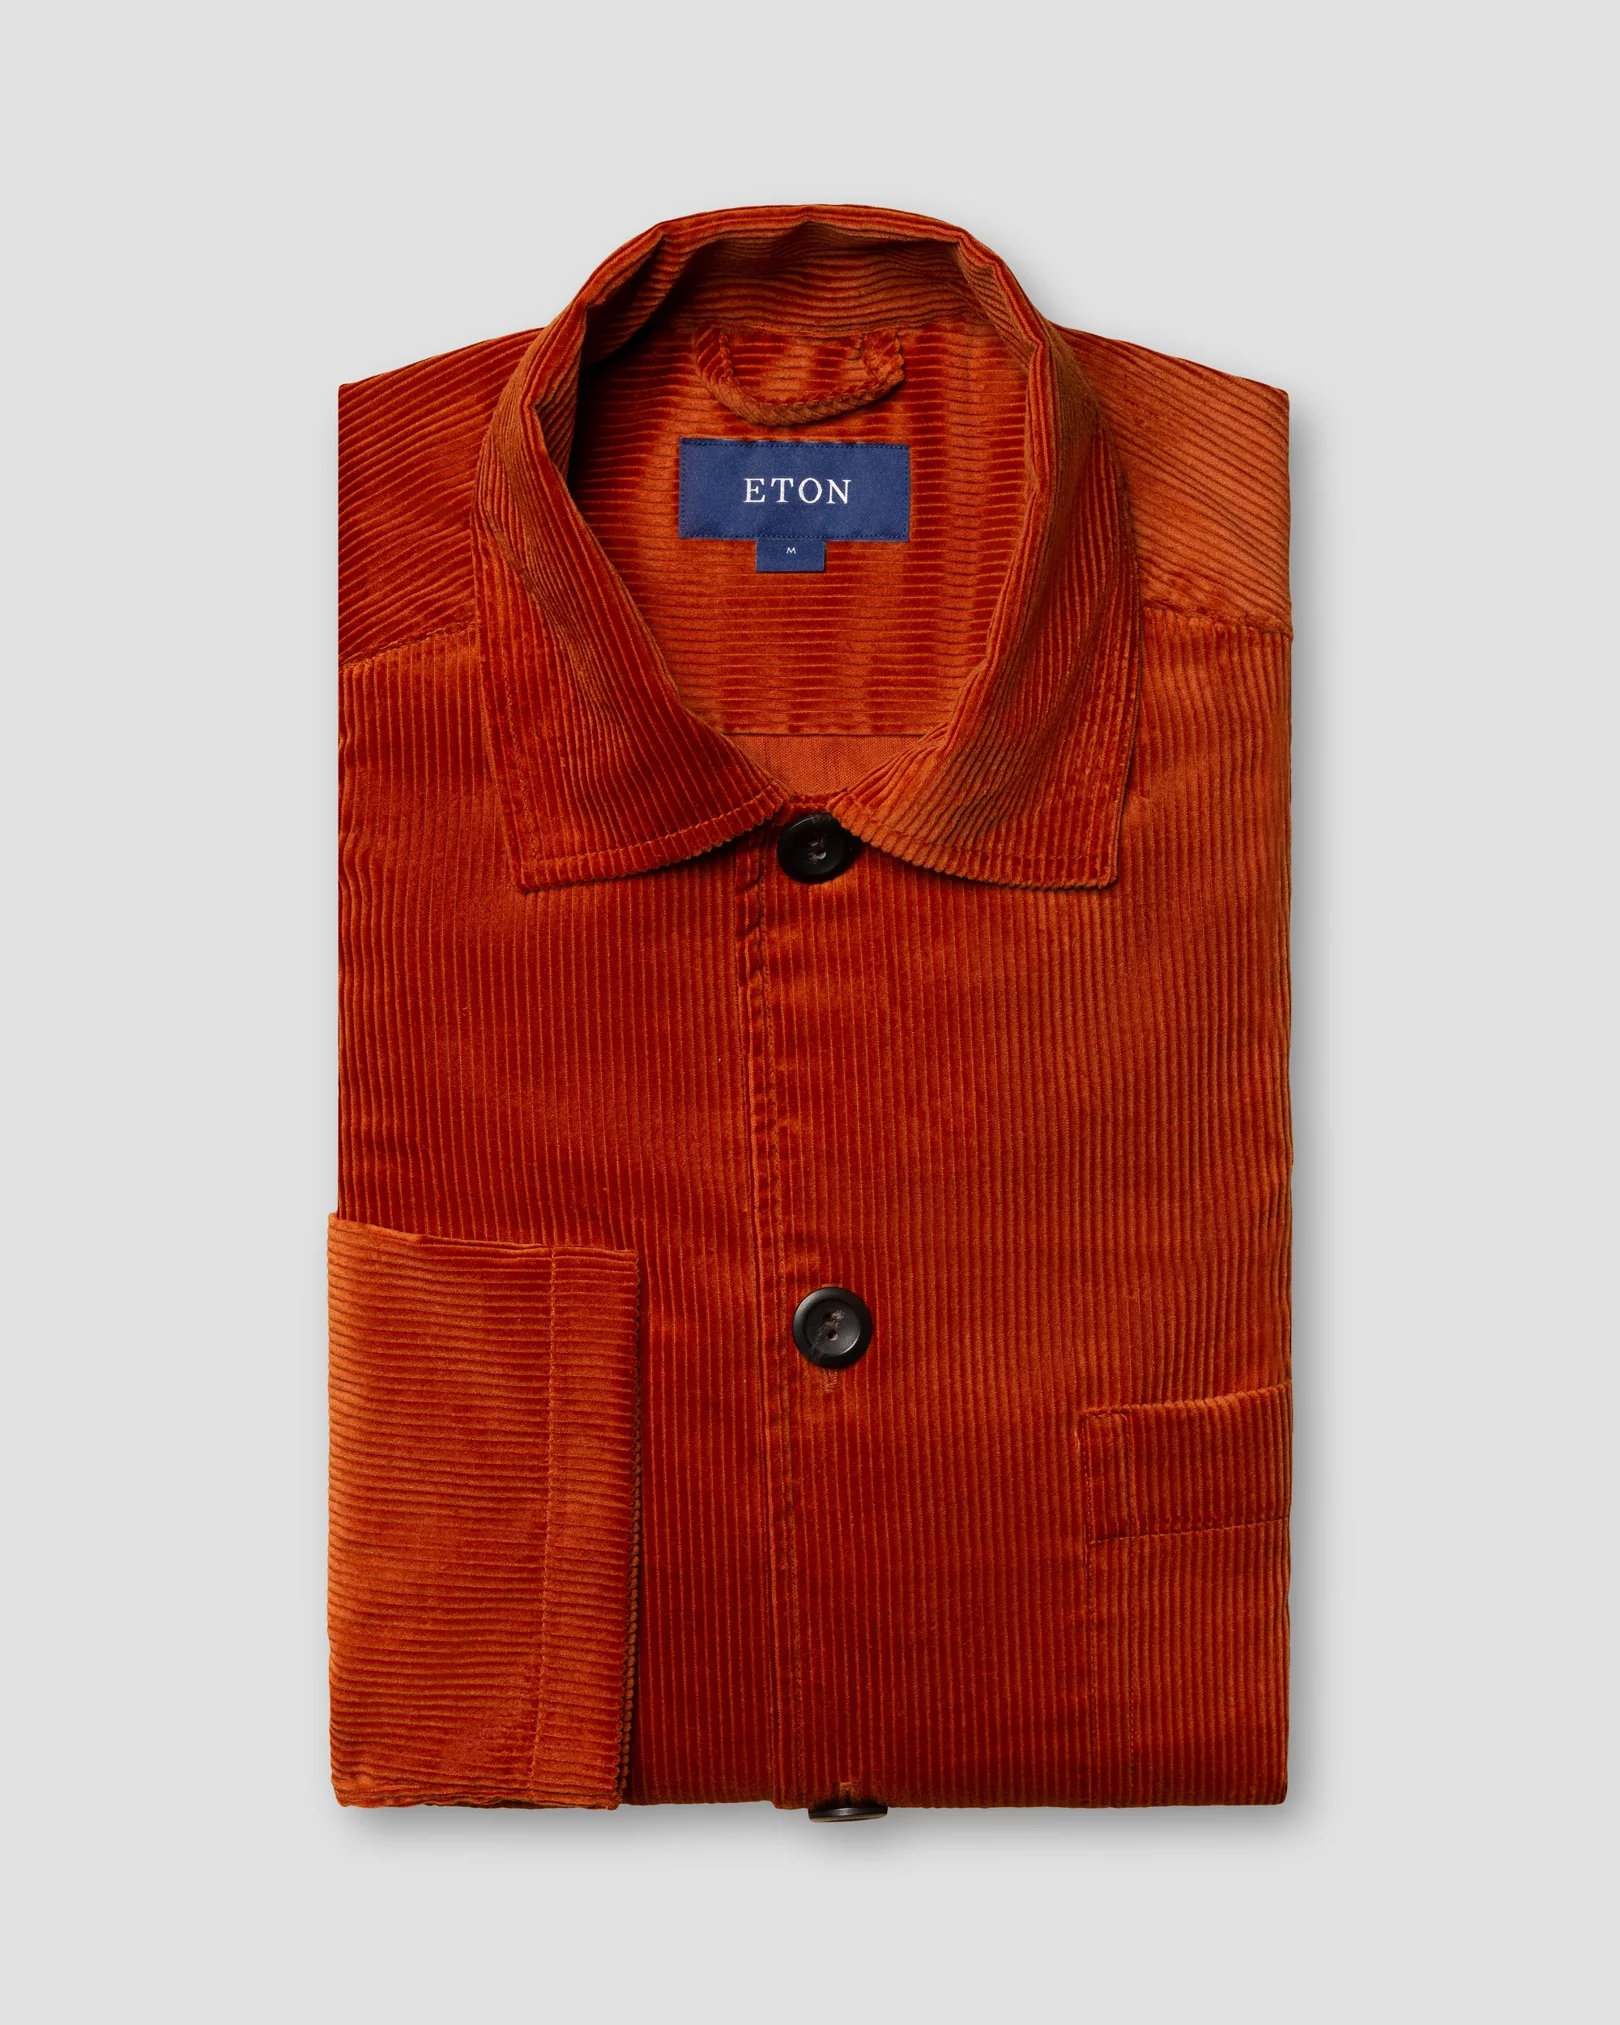 Eton - orange corduroy overshirt turn down straight sleeve end regular